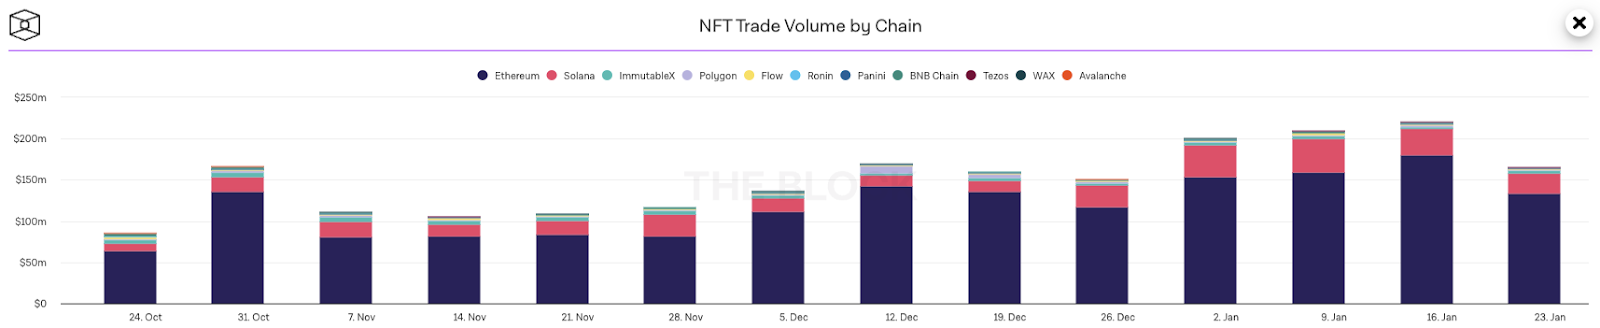 NFT Trading Volumes Per Chain